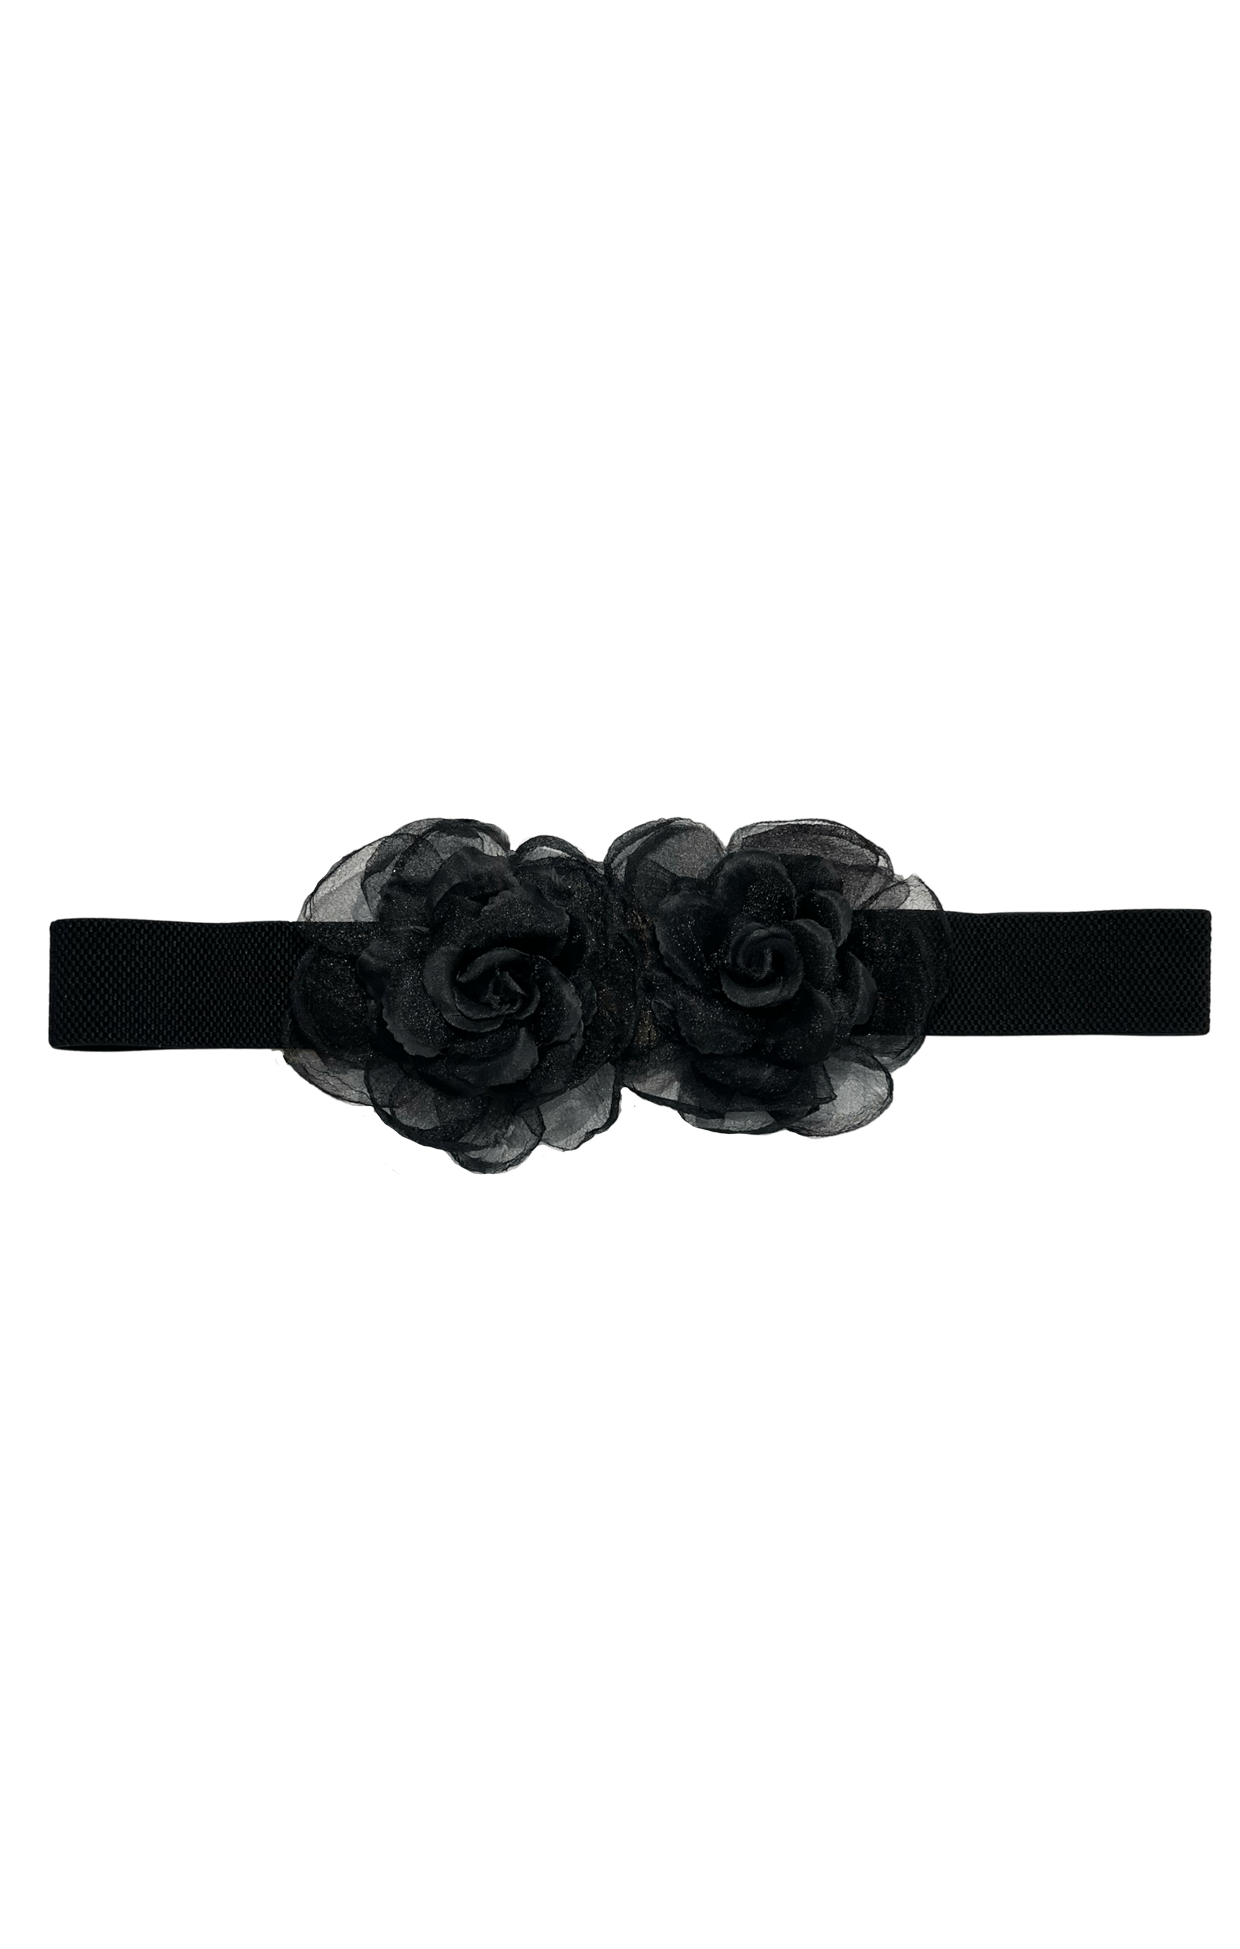 ACCESSORIES Belts One Size / Black ORGANZA FLOWER FRONT BELT IN BLACK